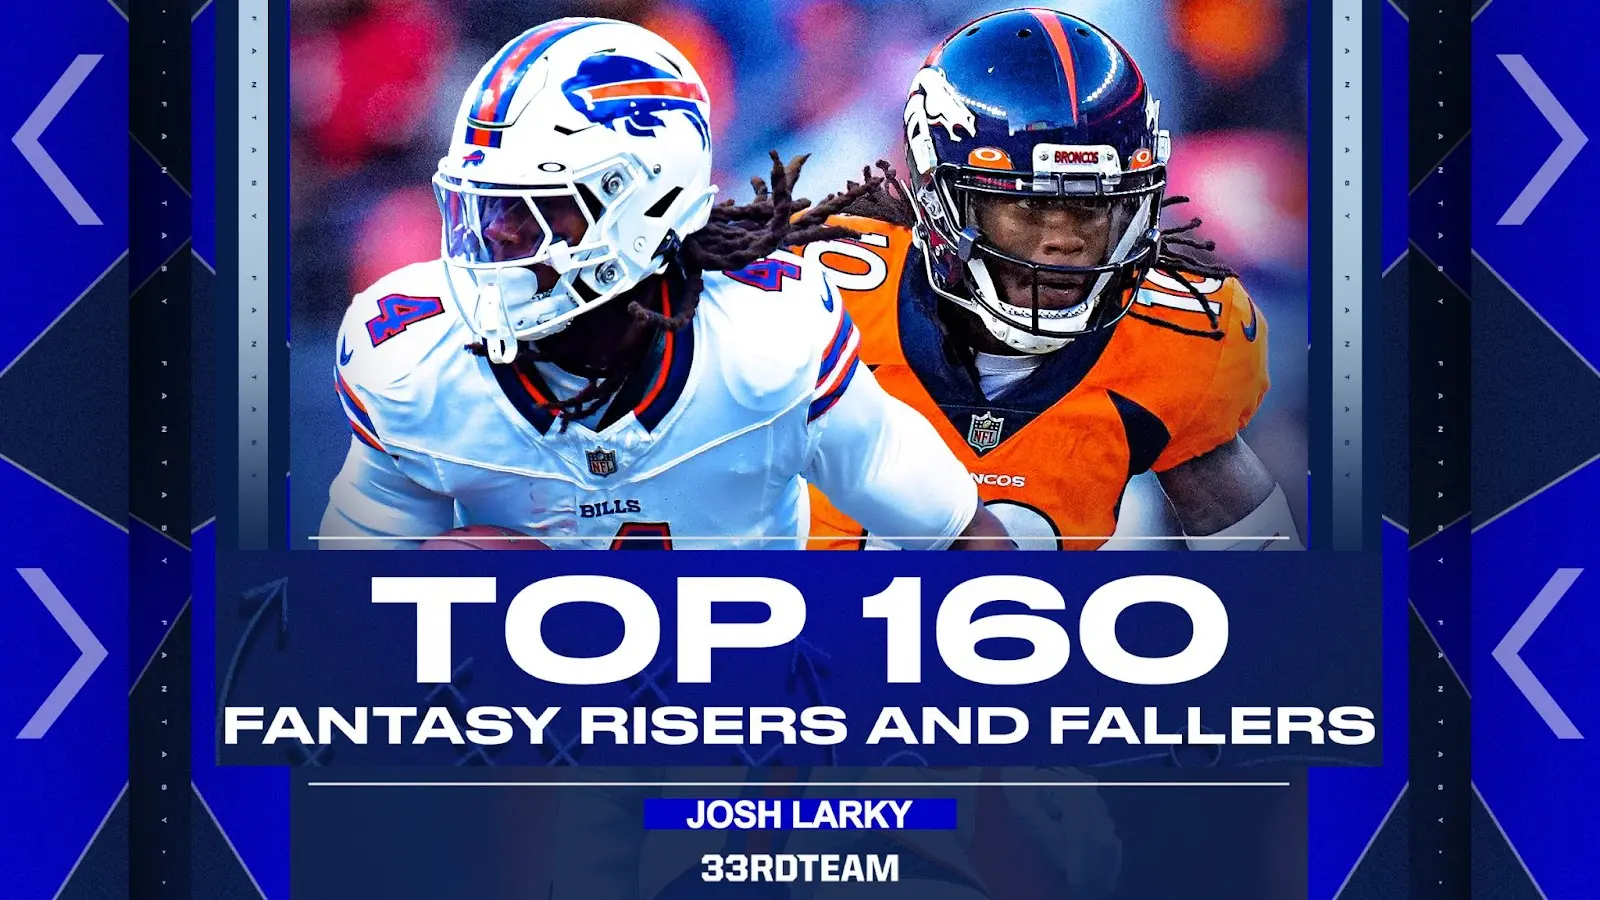 Top 33 Fantasy Football Quarterback Rankings for 2023 NFL Season